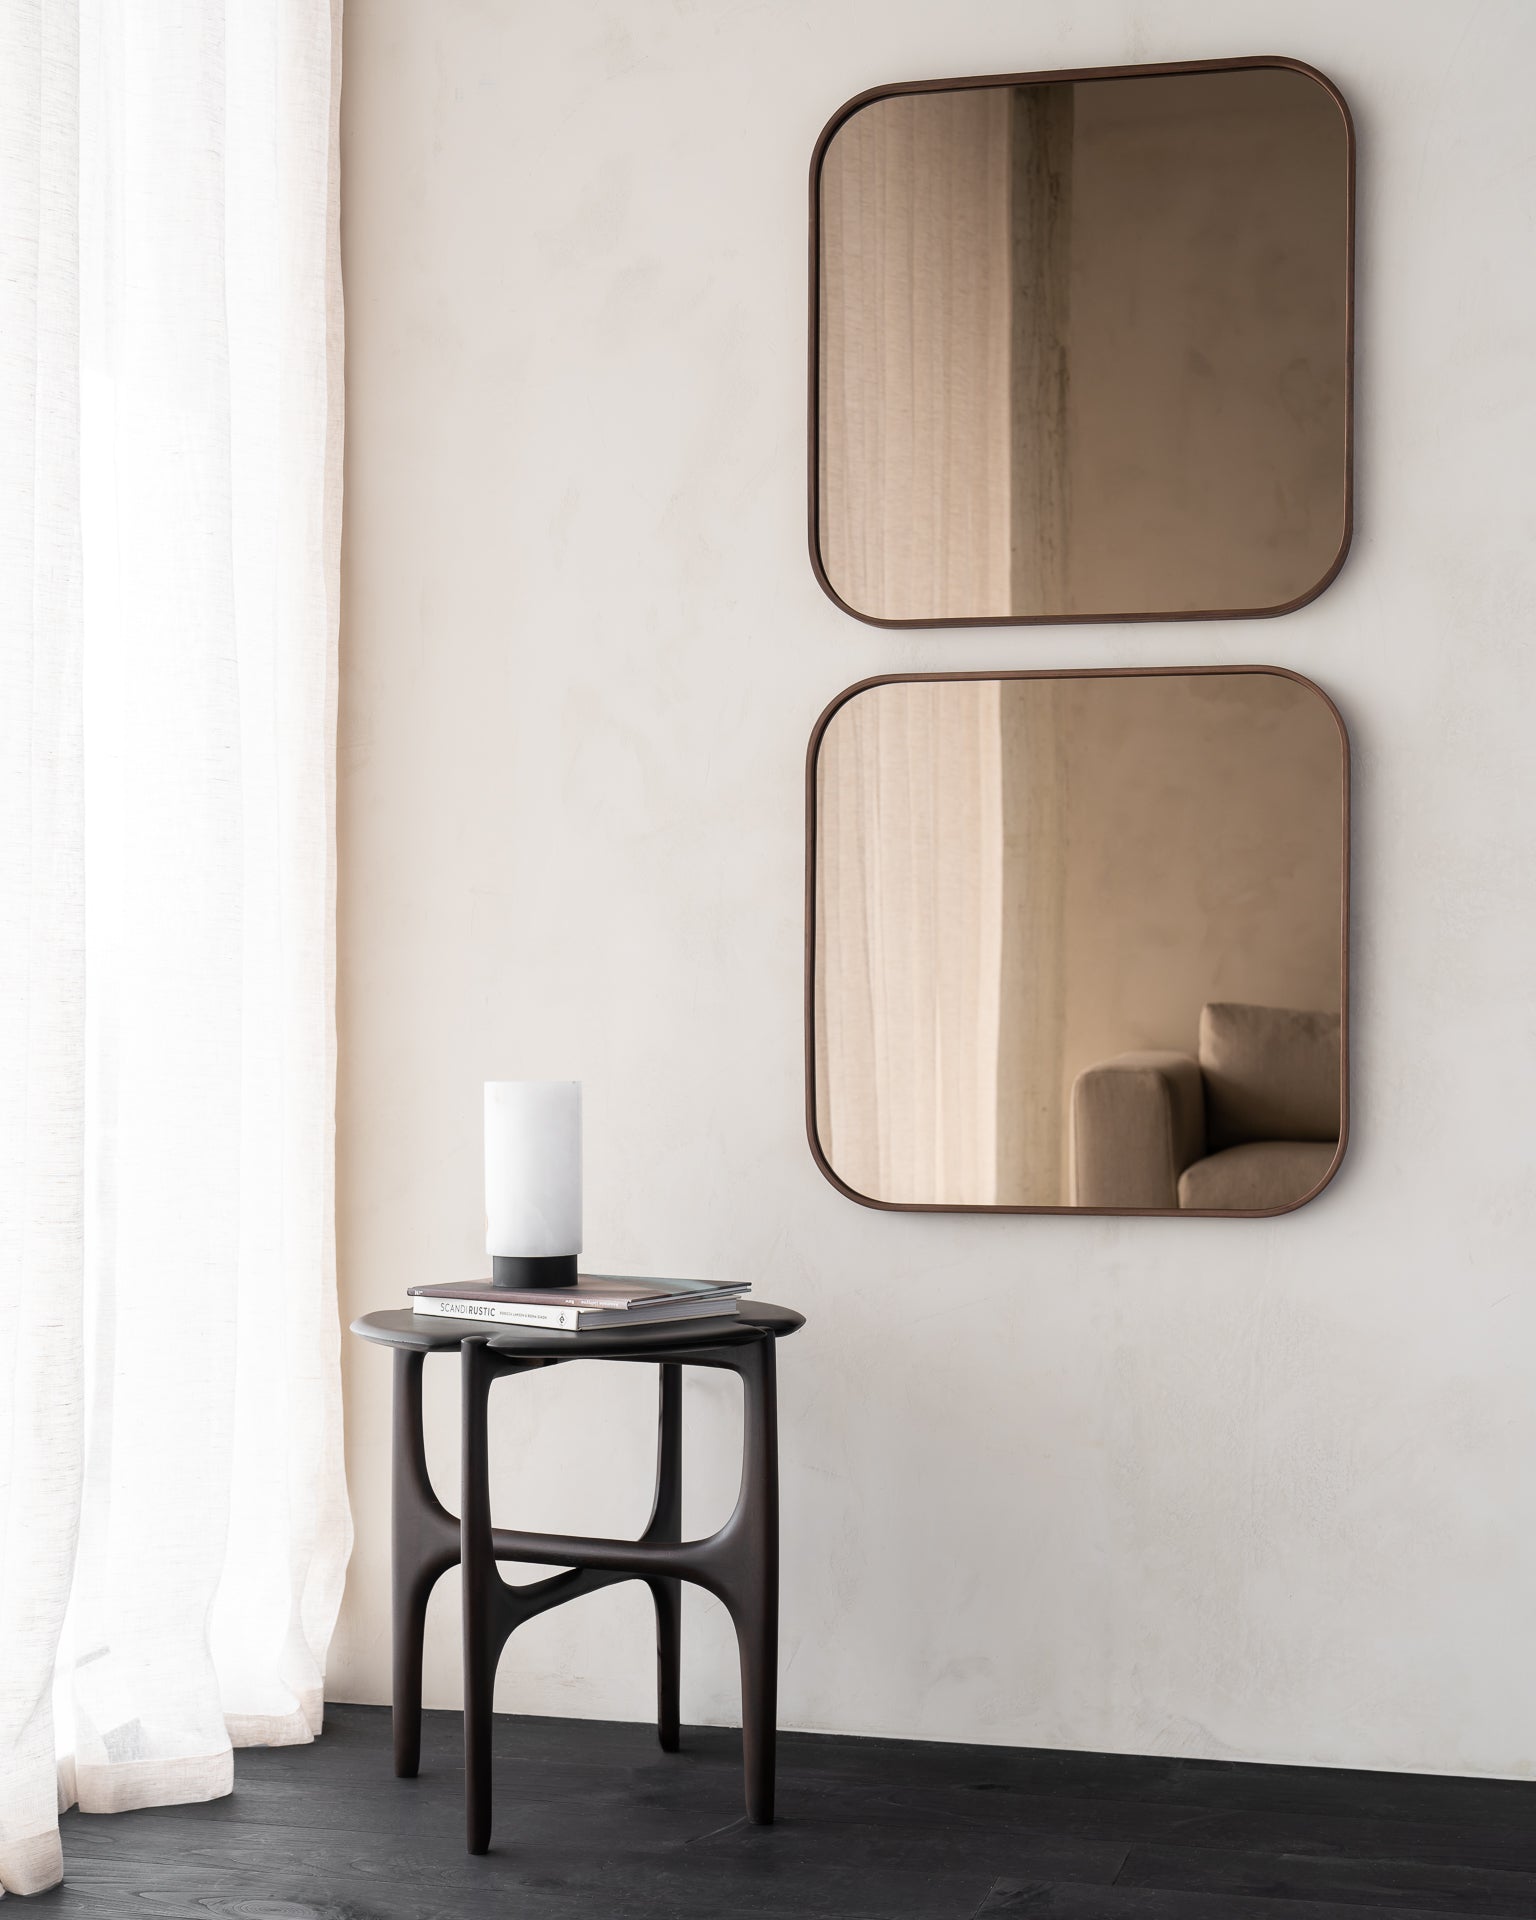 Camber Wall Mirror